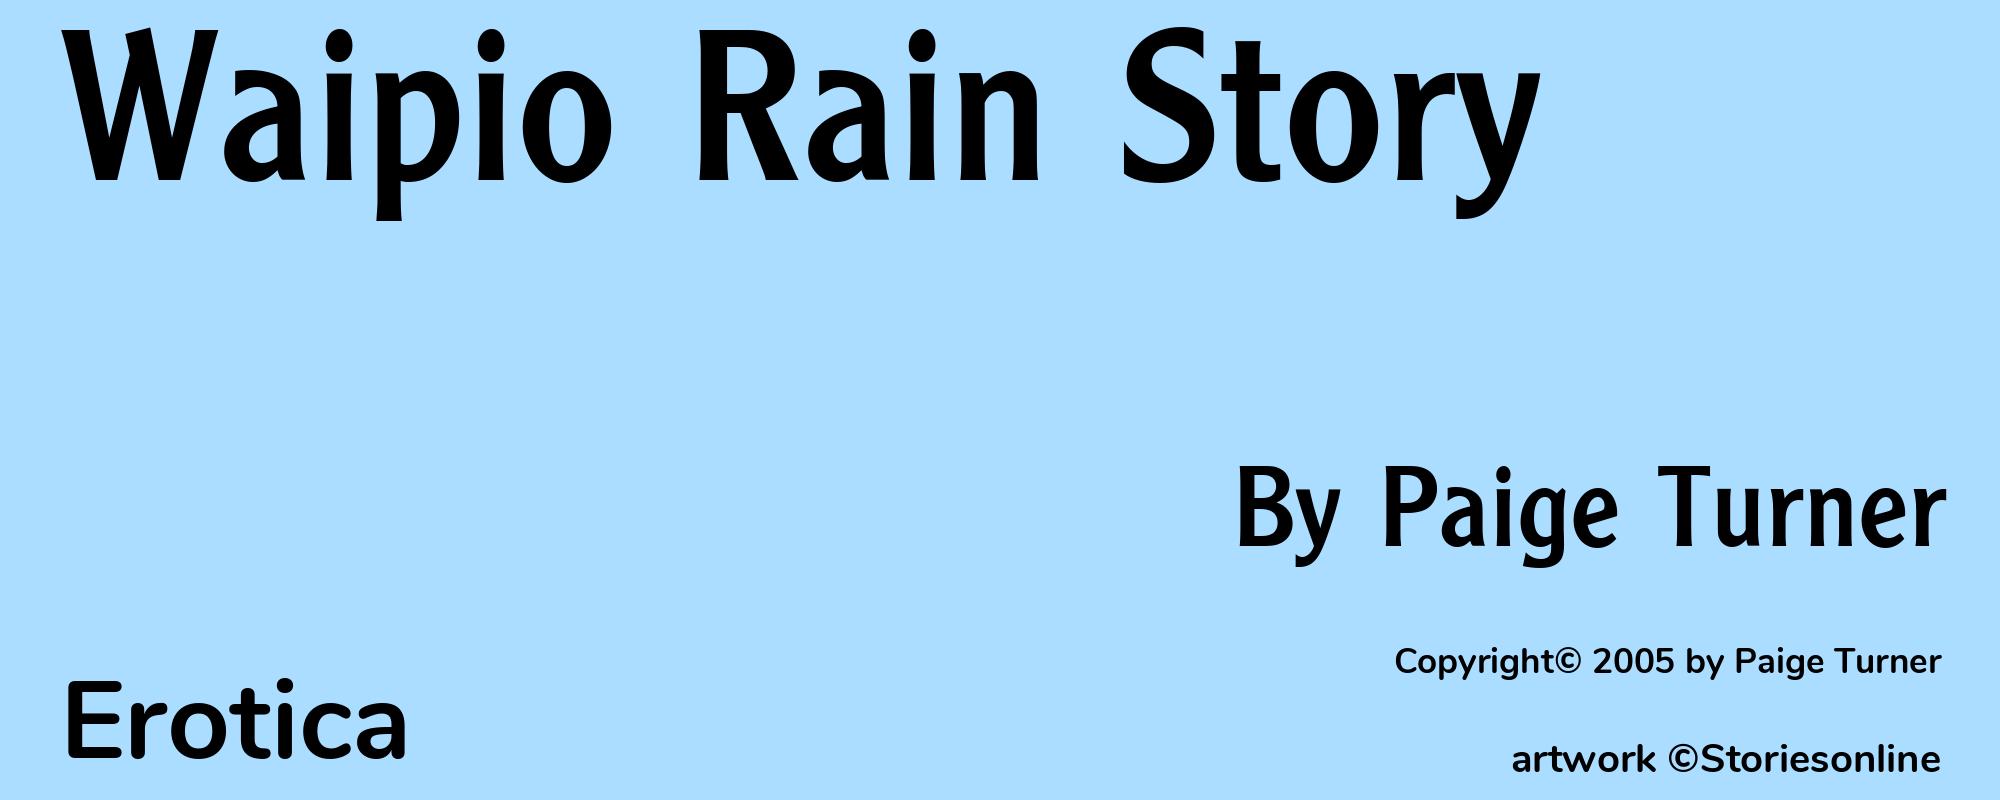 Waipio Rain Story - Cover